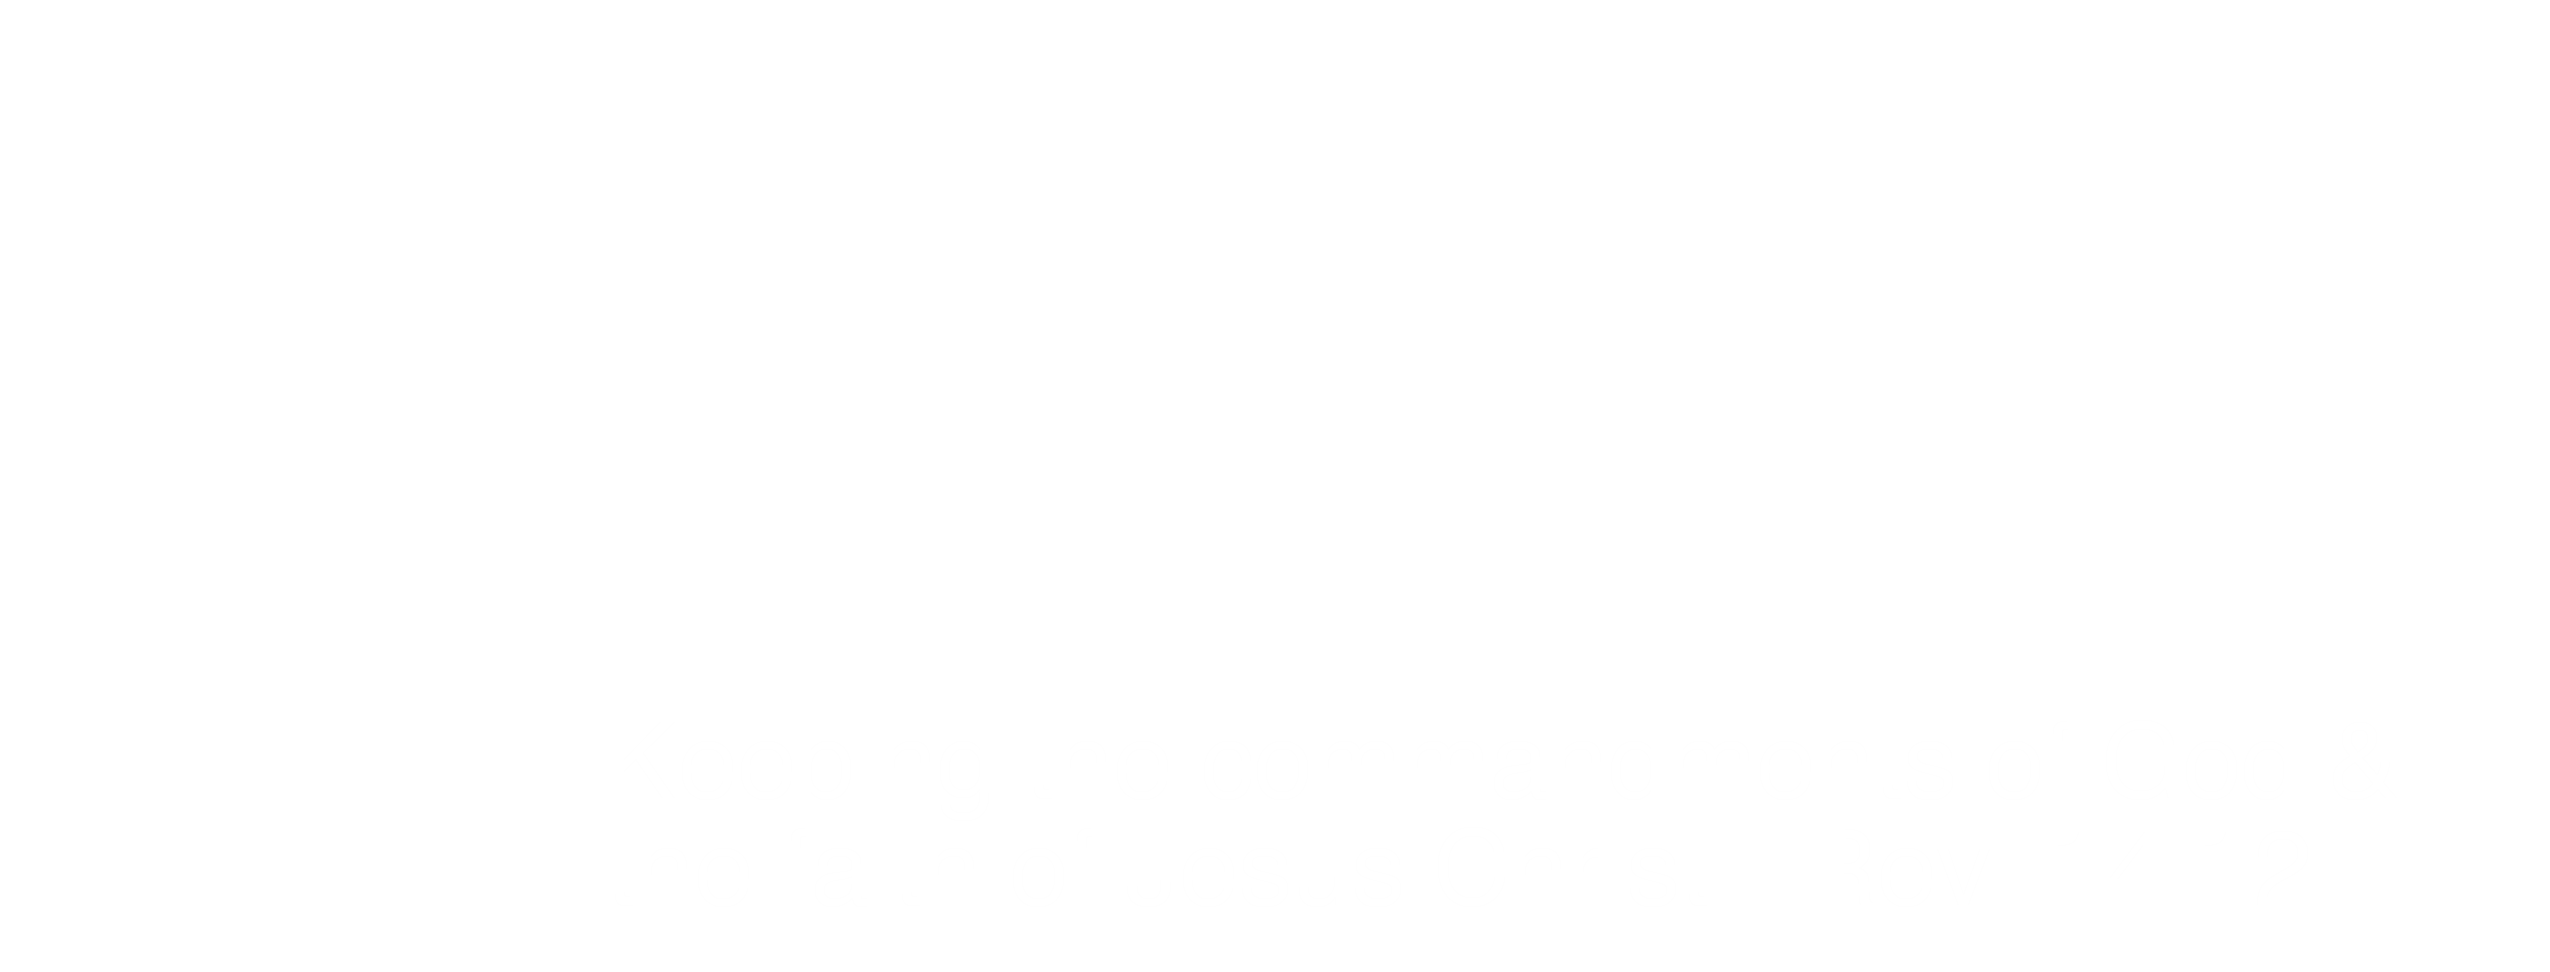 Restored Covenant Community